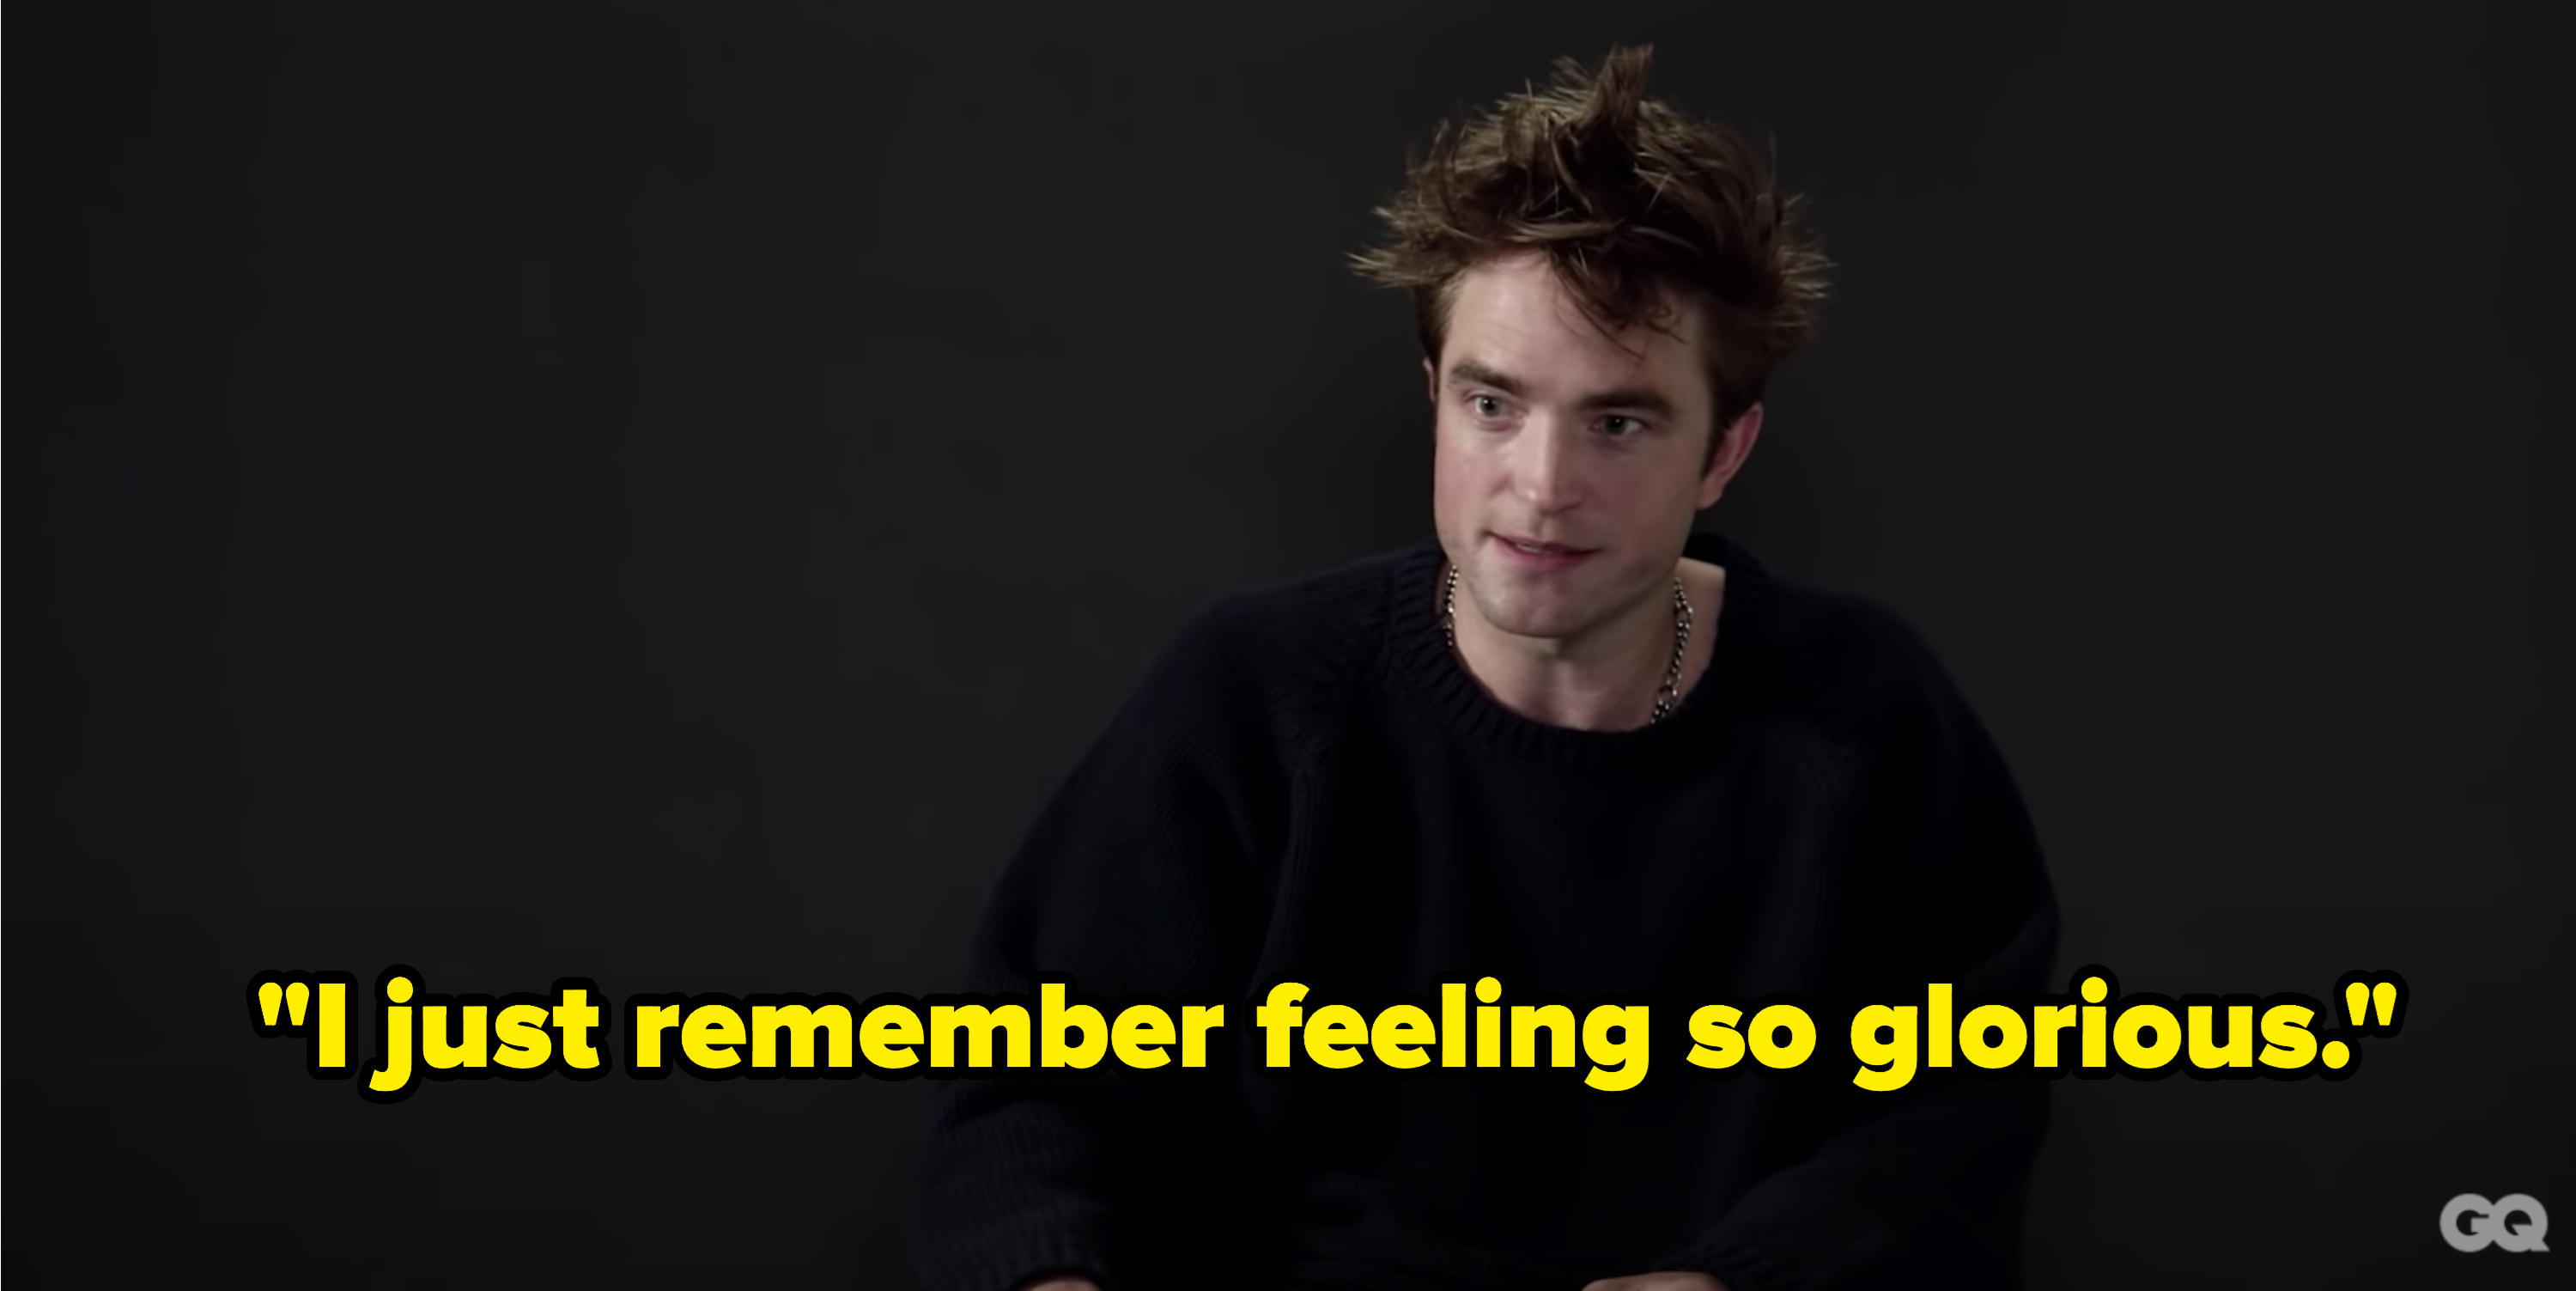 Robert Pattinson said &quot;I just remember feeling so glorious&quot;